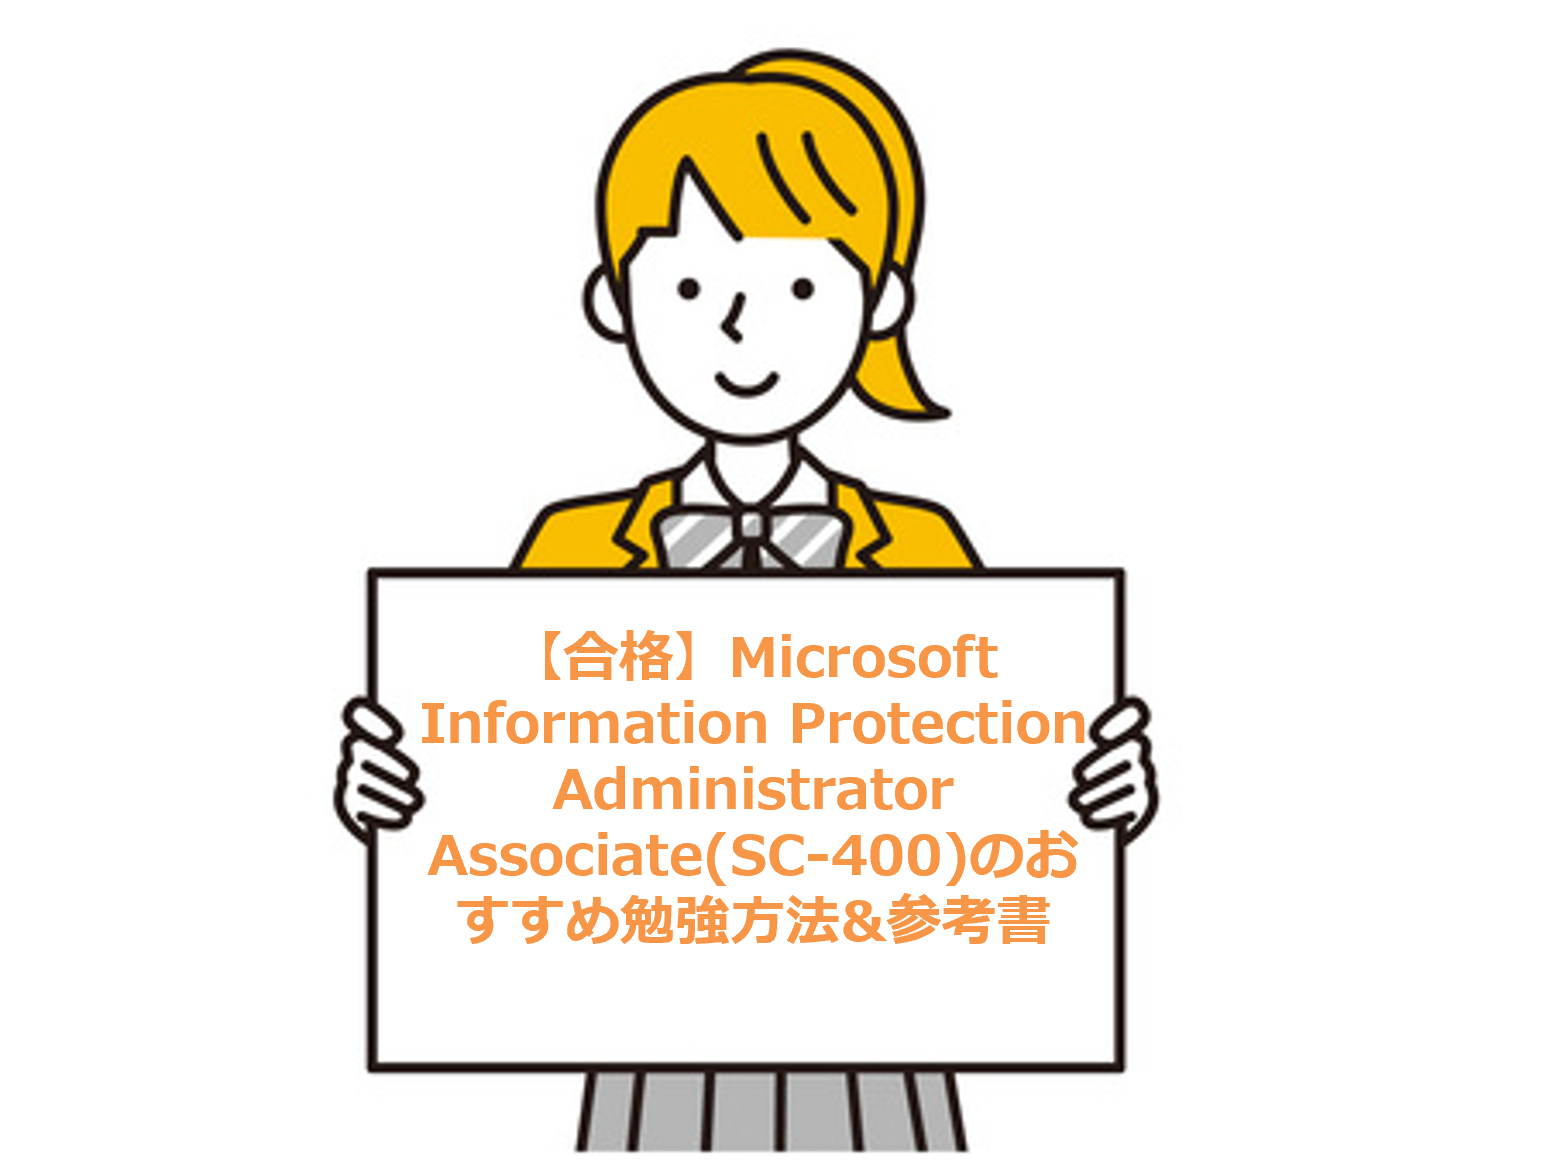 Microsoft Information Protection Administrator Associate(SC-400